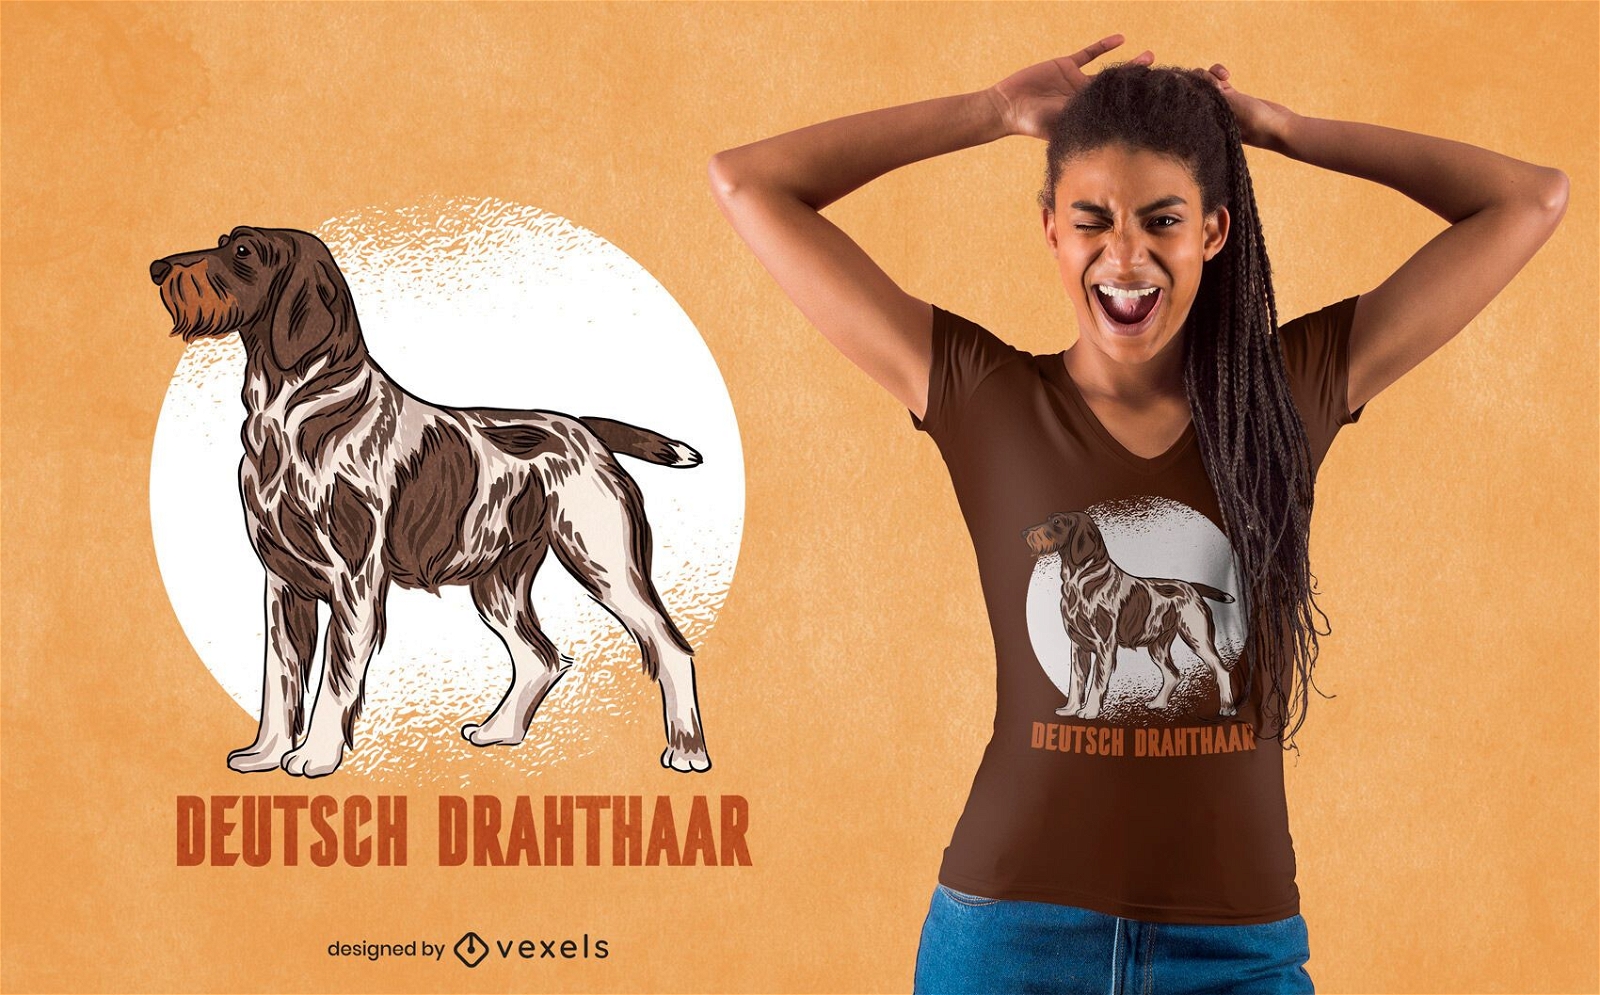 Deutsches Drahthaar-Zeiger-Hundet-shirt Design